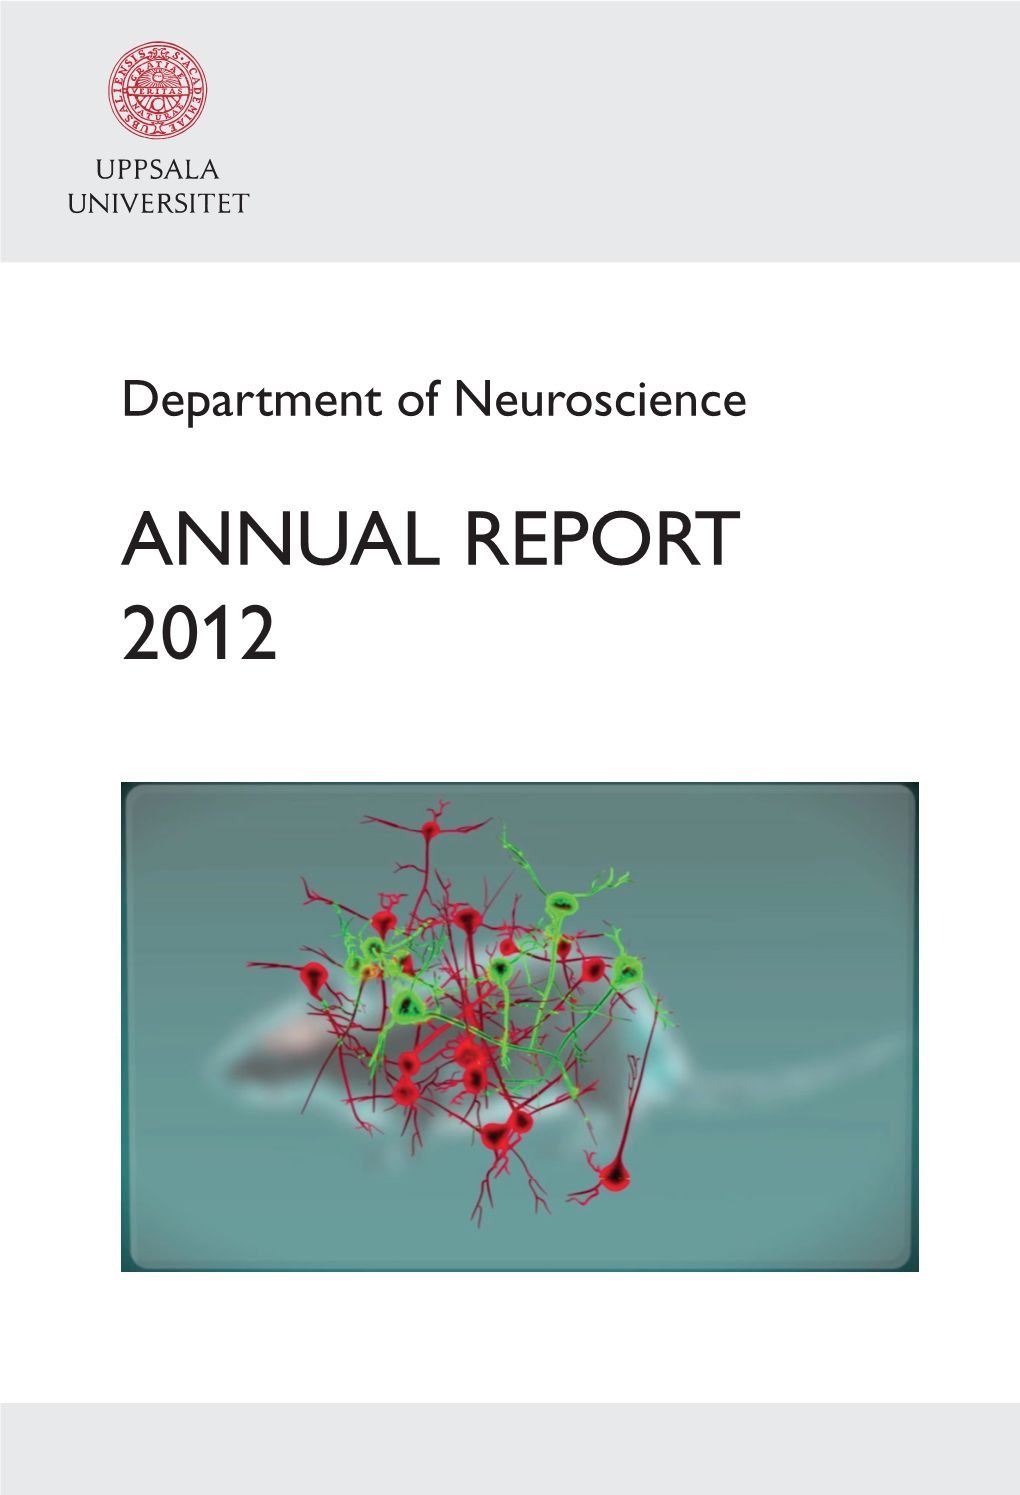 Department of Neuroscience of Department 2012 REPORT ANNUAL 2012 ANNUAL REPORT Ofneurosciencedepartment